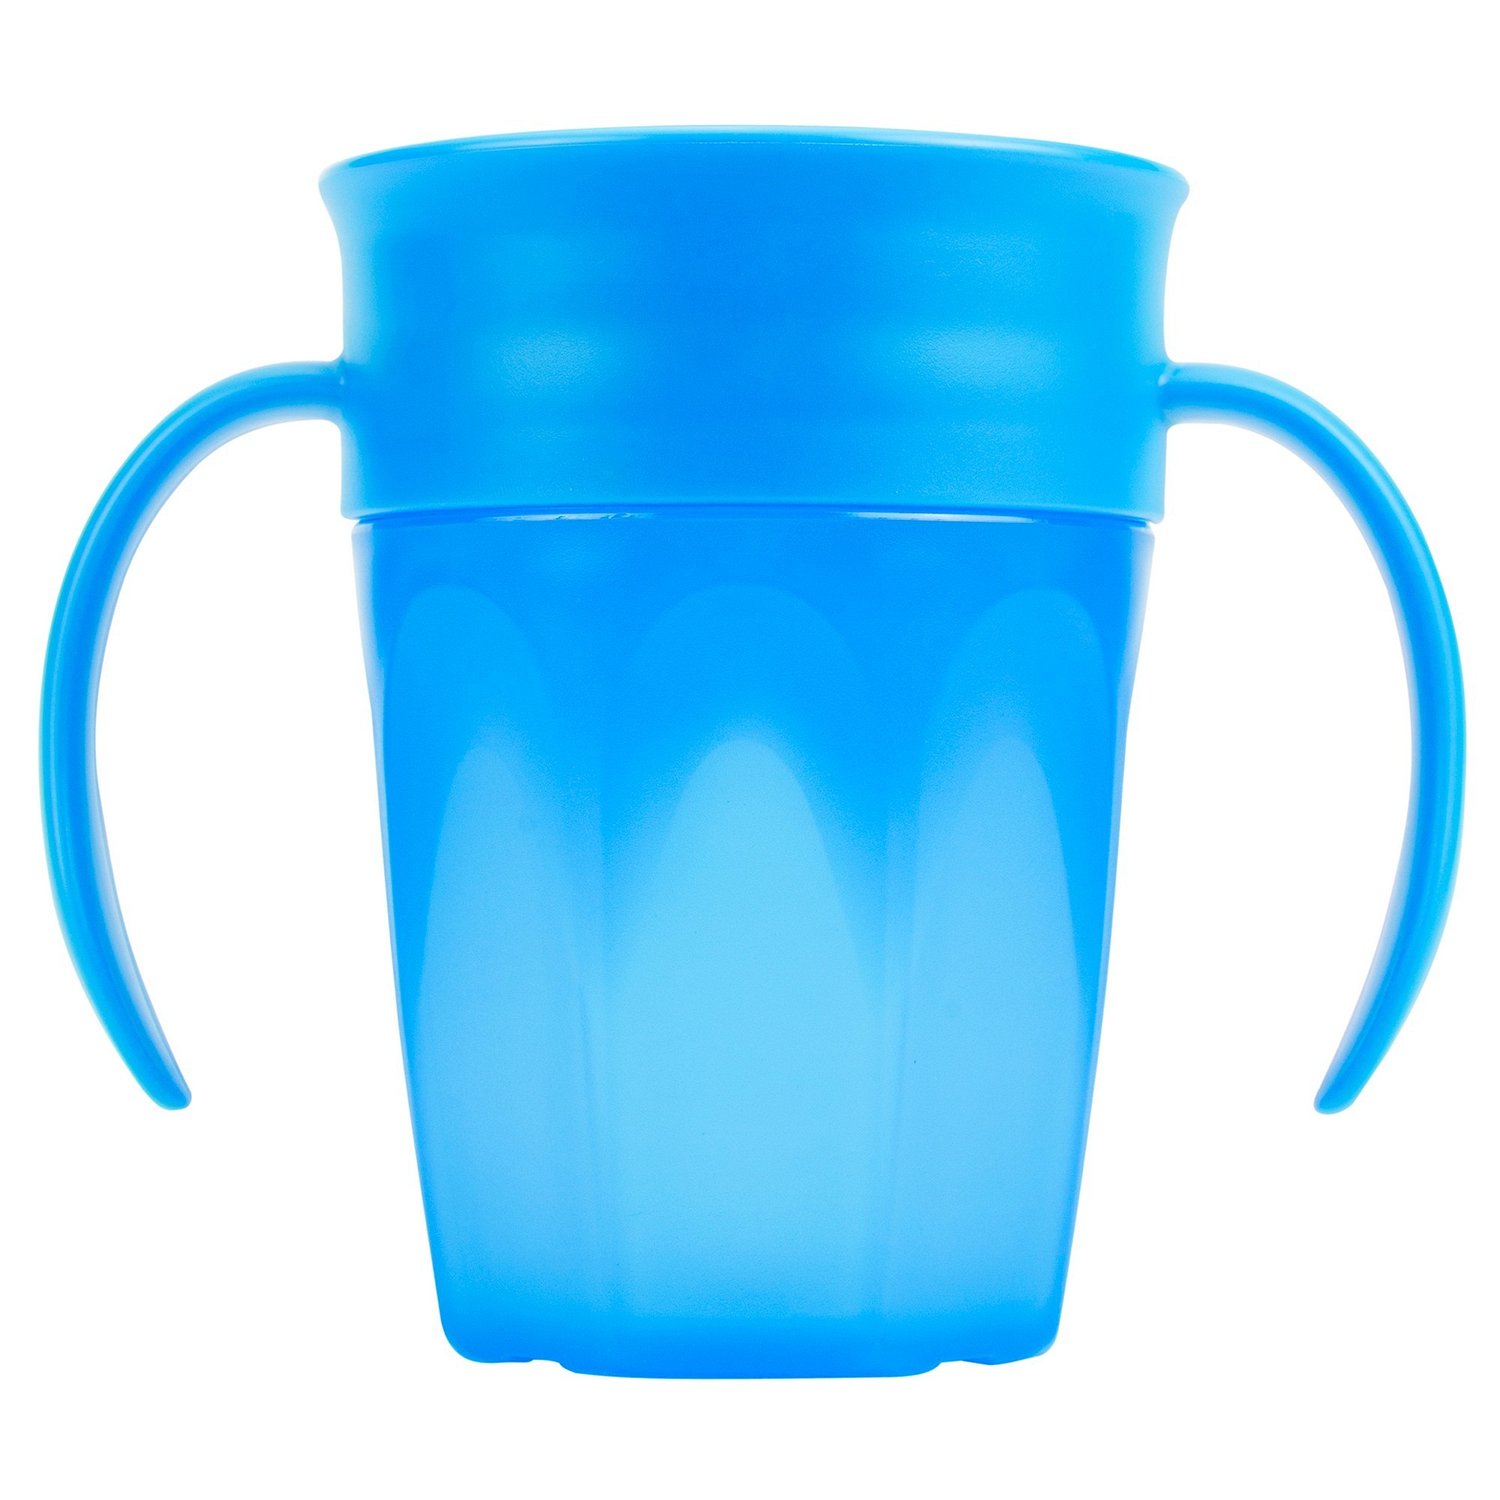 Чашка-поильник Cheers 360, 200 мл, 6+ месяцев, цвет синий  